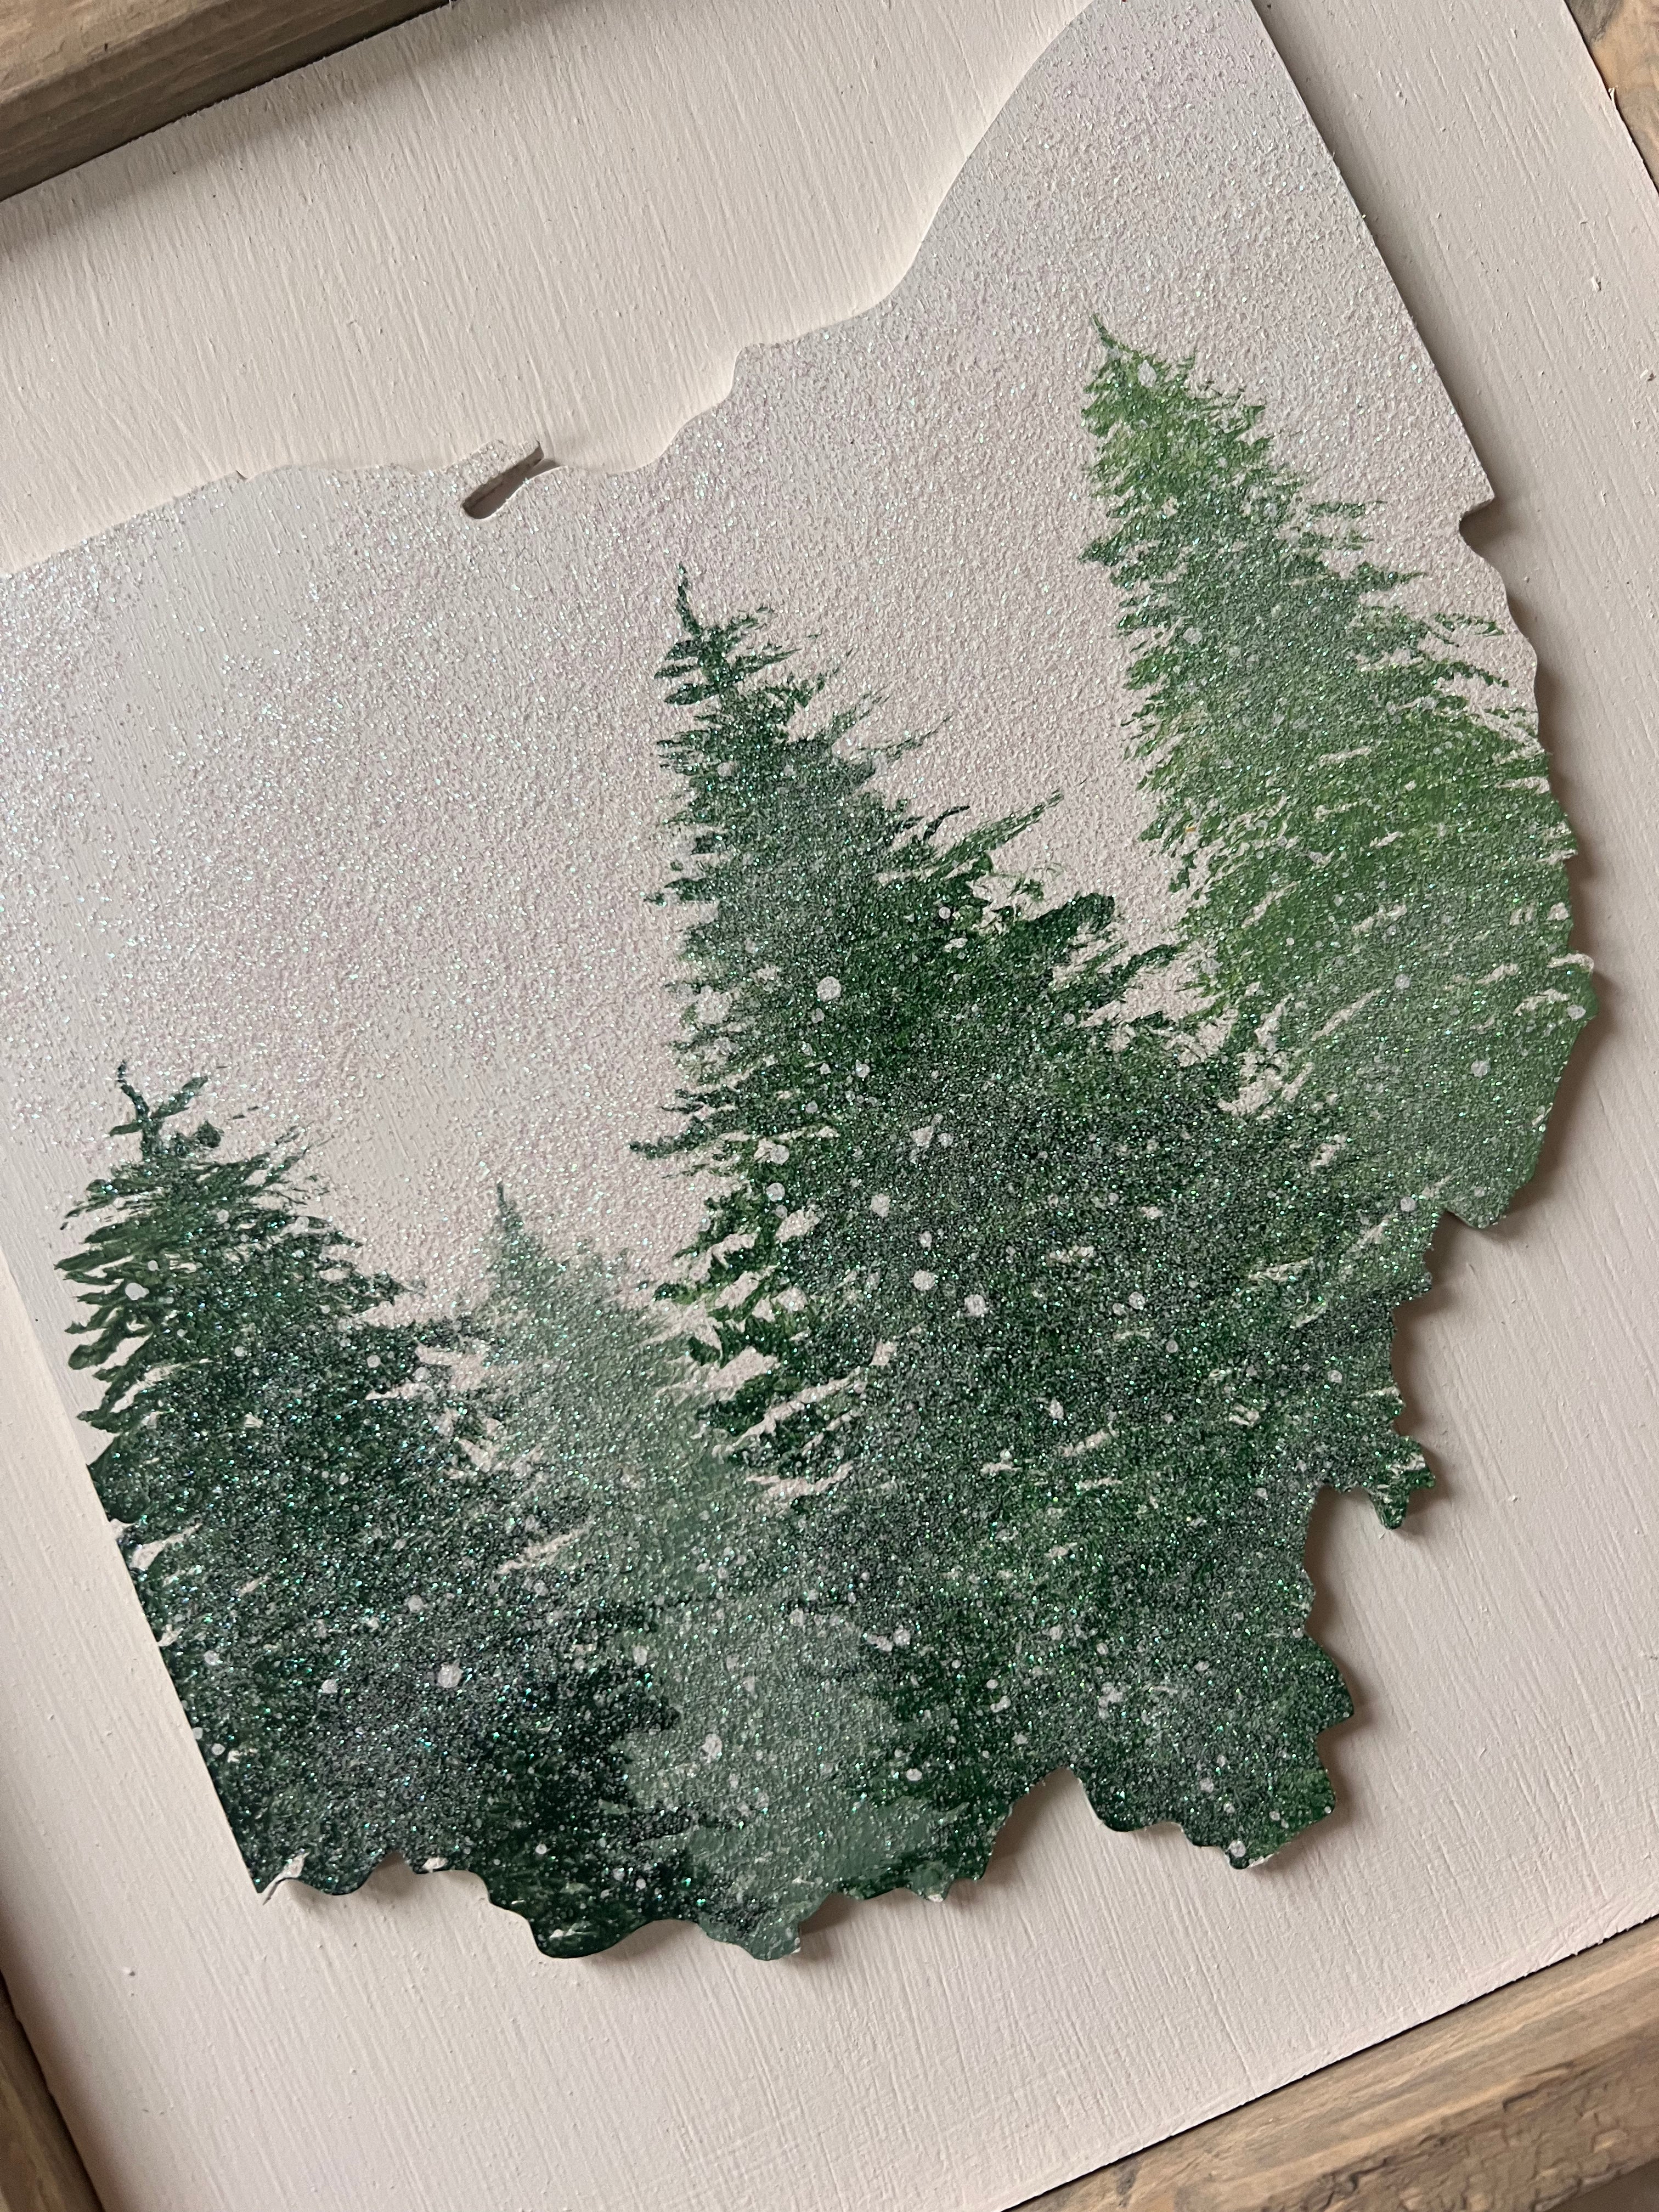 Painted Ohio Tree Series no. 2